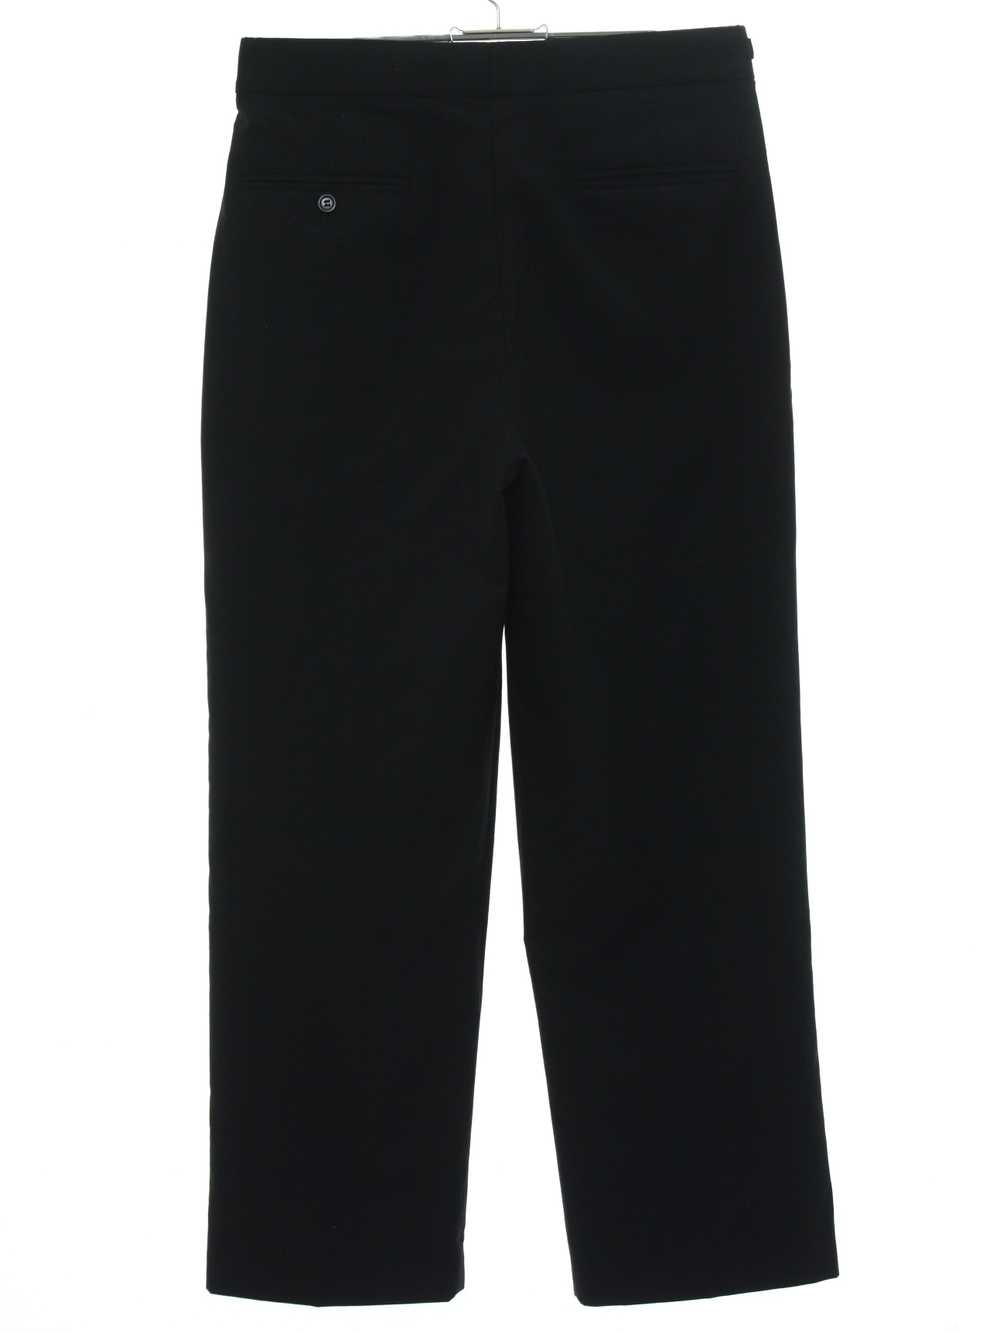 1990's Mens Pleated Black Tuxedo Pants - image 3